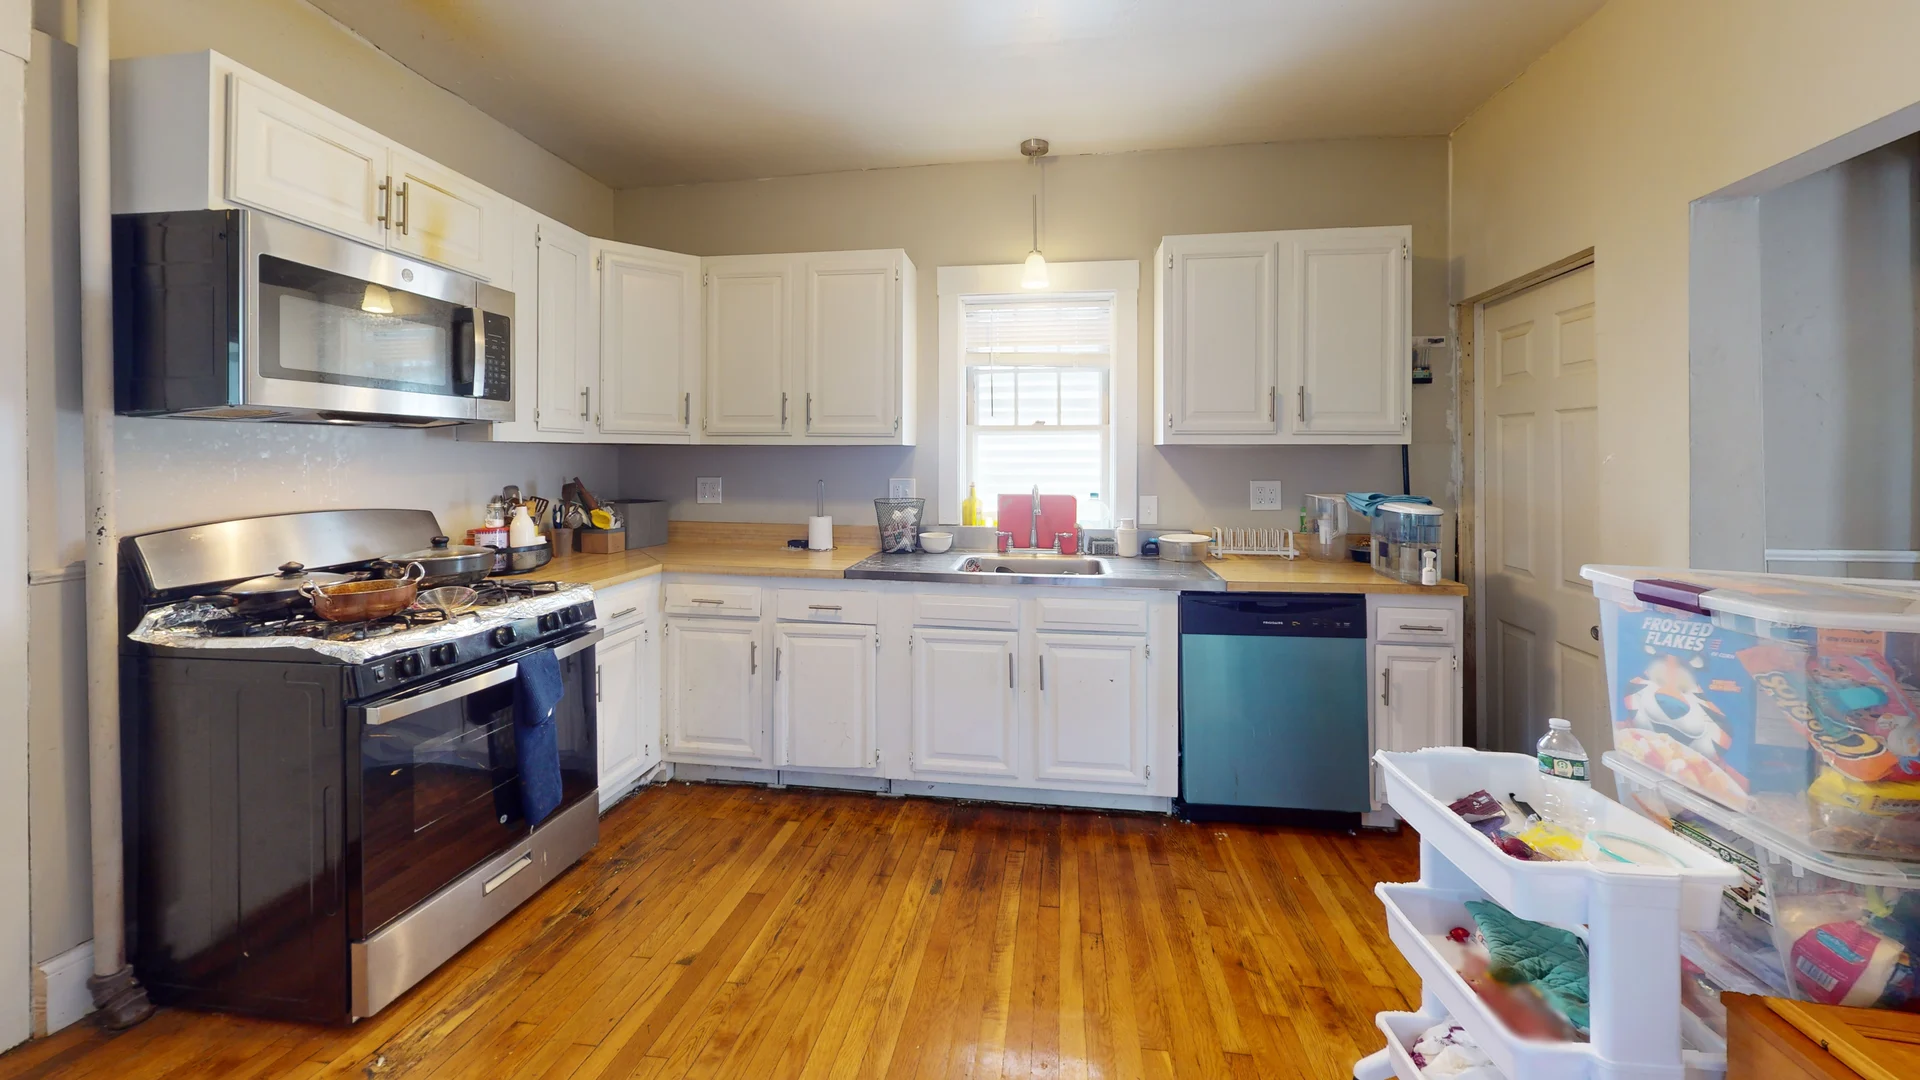 Photos of apartment on Winship St.,Boston MA 02135